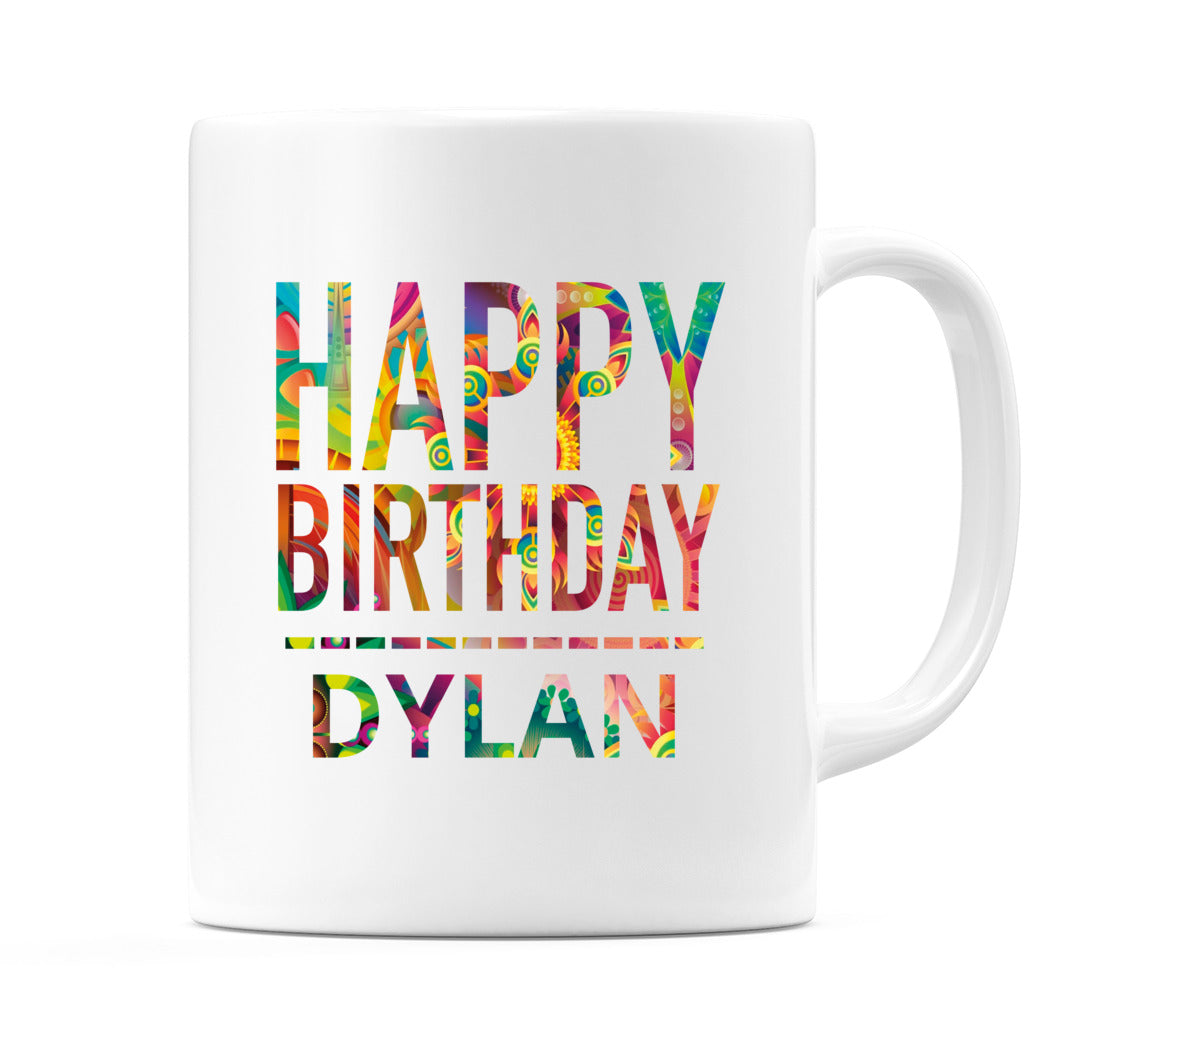 Happy Birthday Dylan (Tie Dye Effect) Mug Cup by WeDoMugs